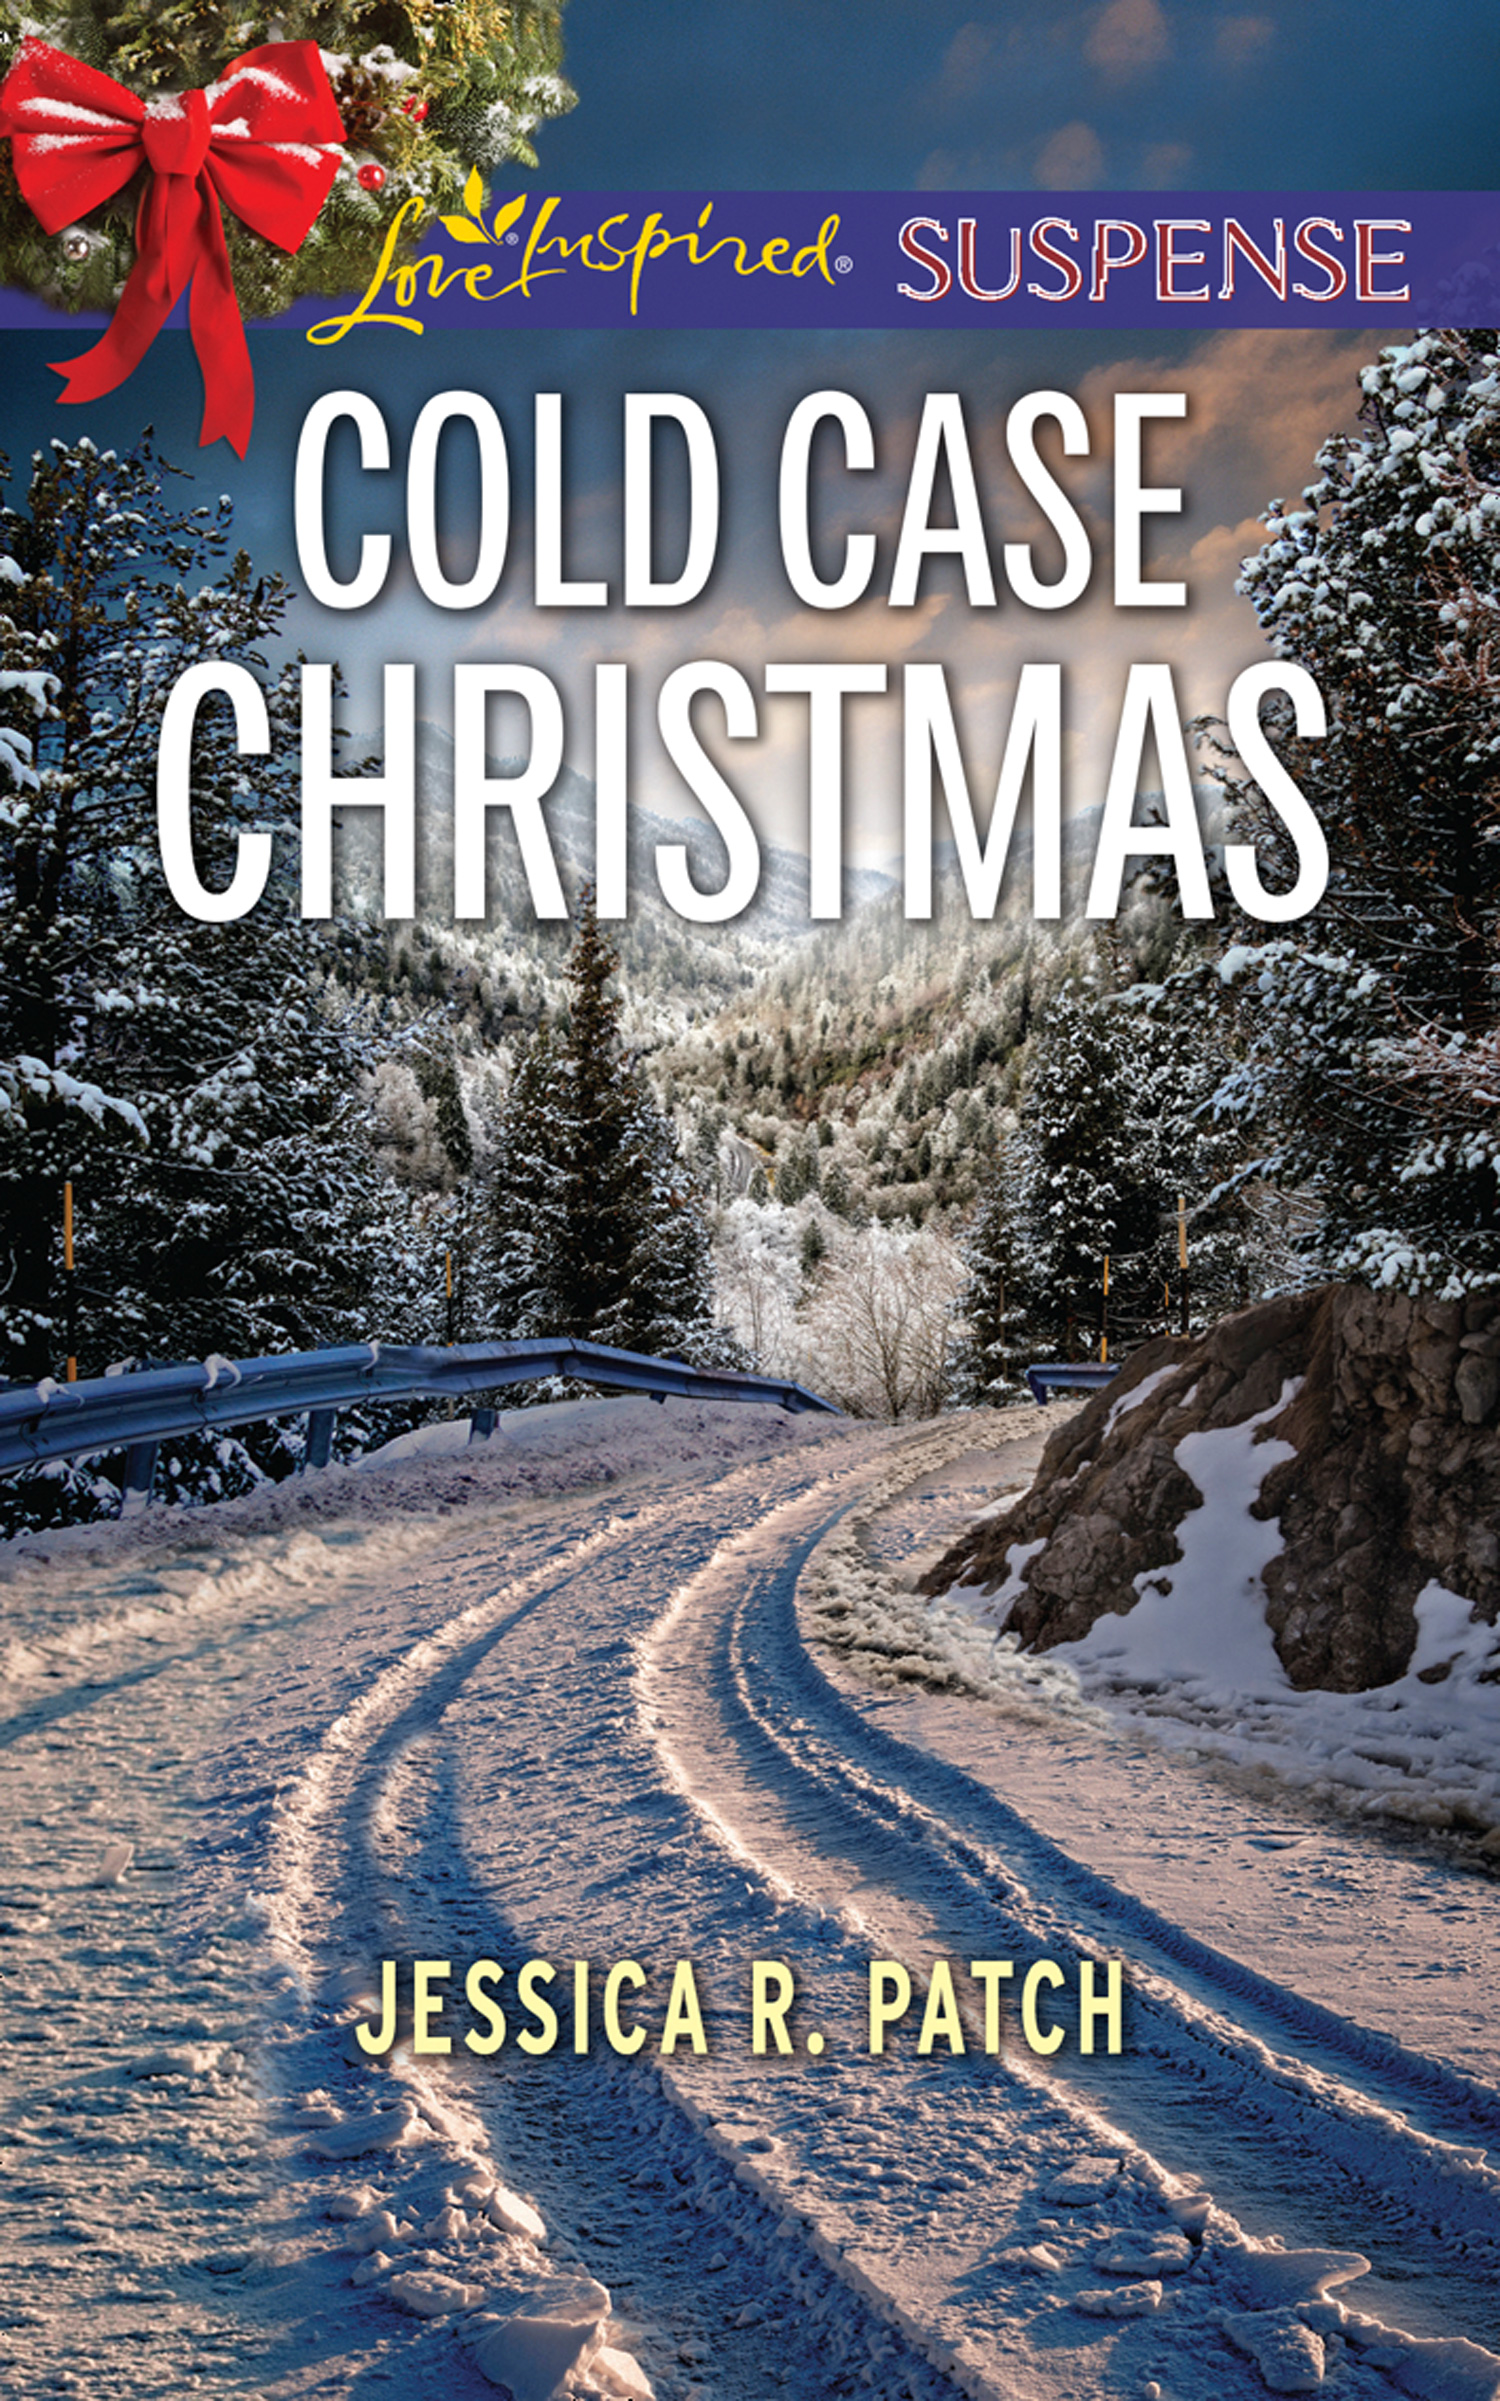 Cold book. Jessica Case. The Coldest Case.